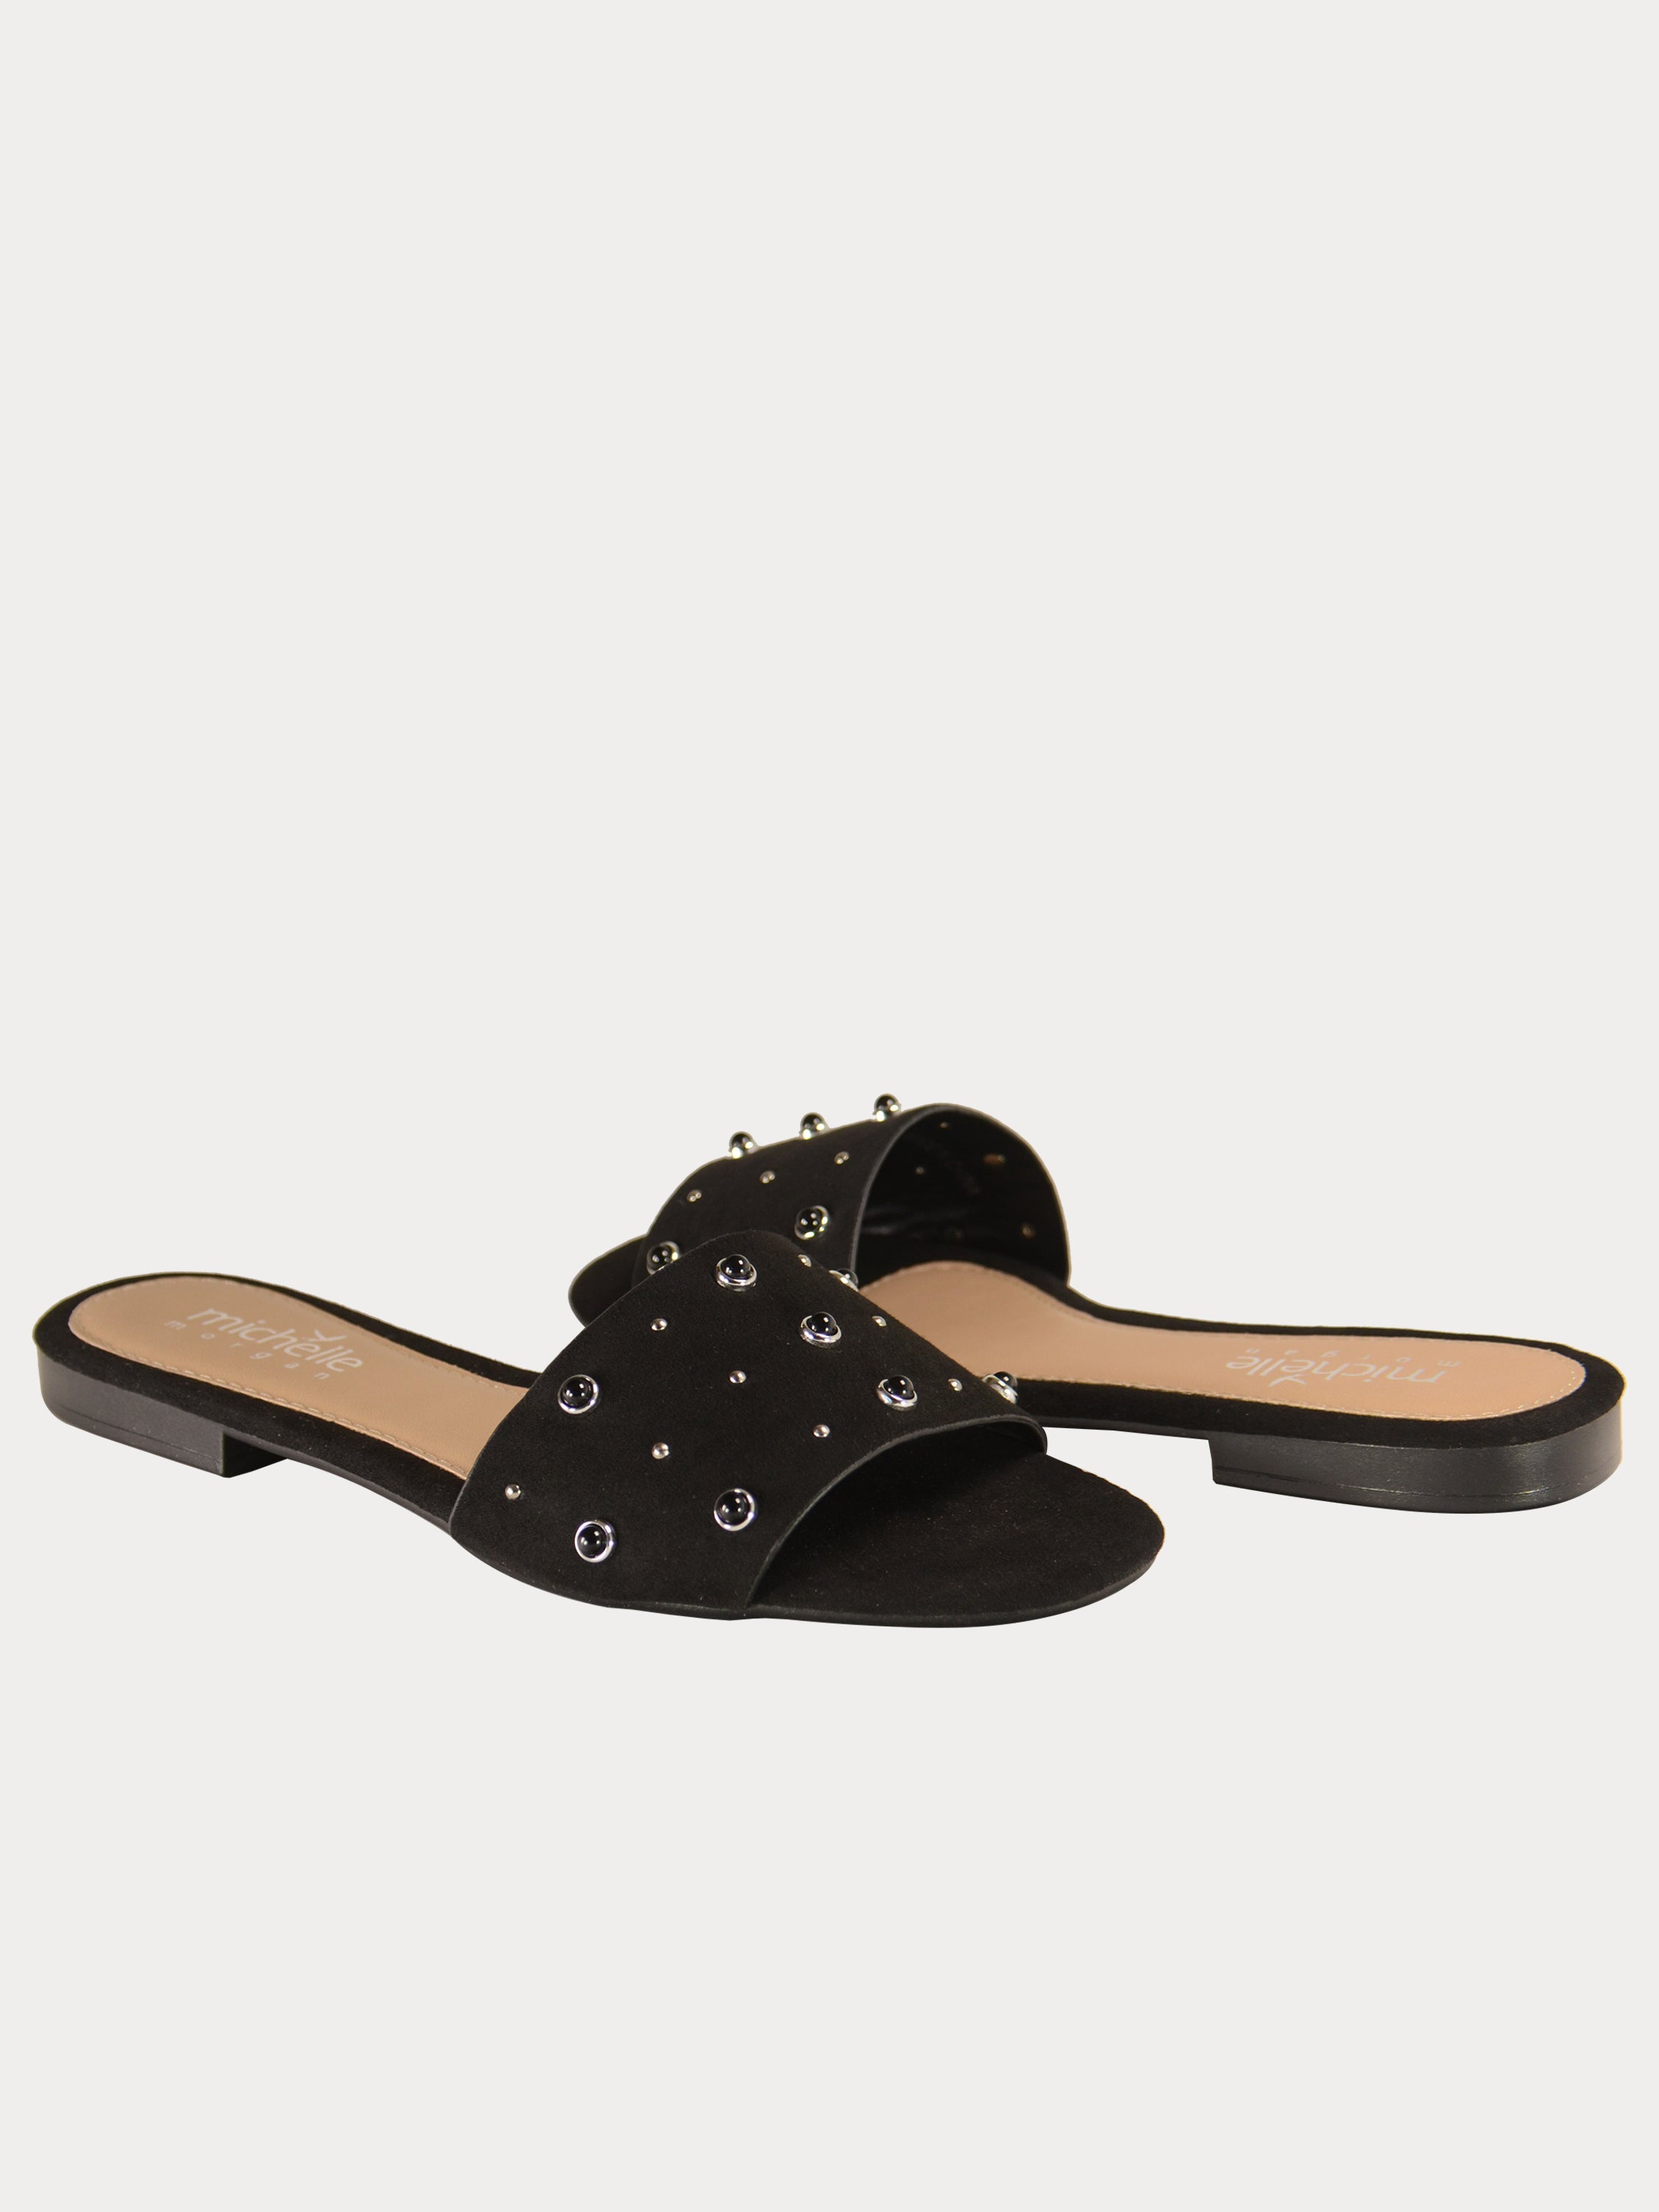 Michelle Morgan 814130 Women's Slider Sandals #color_Black